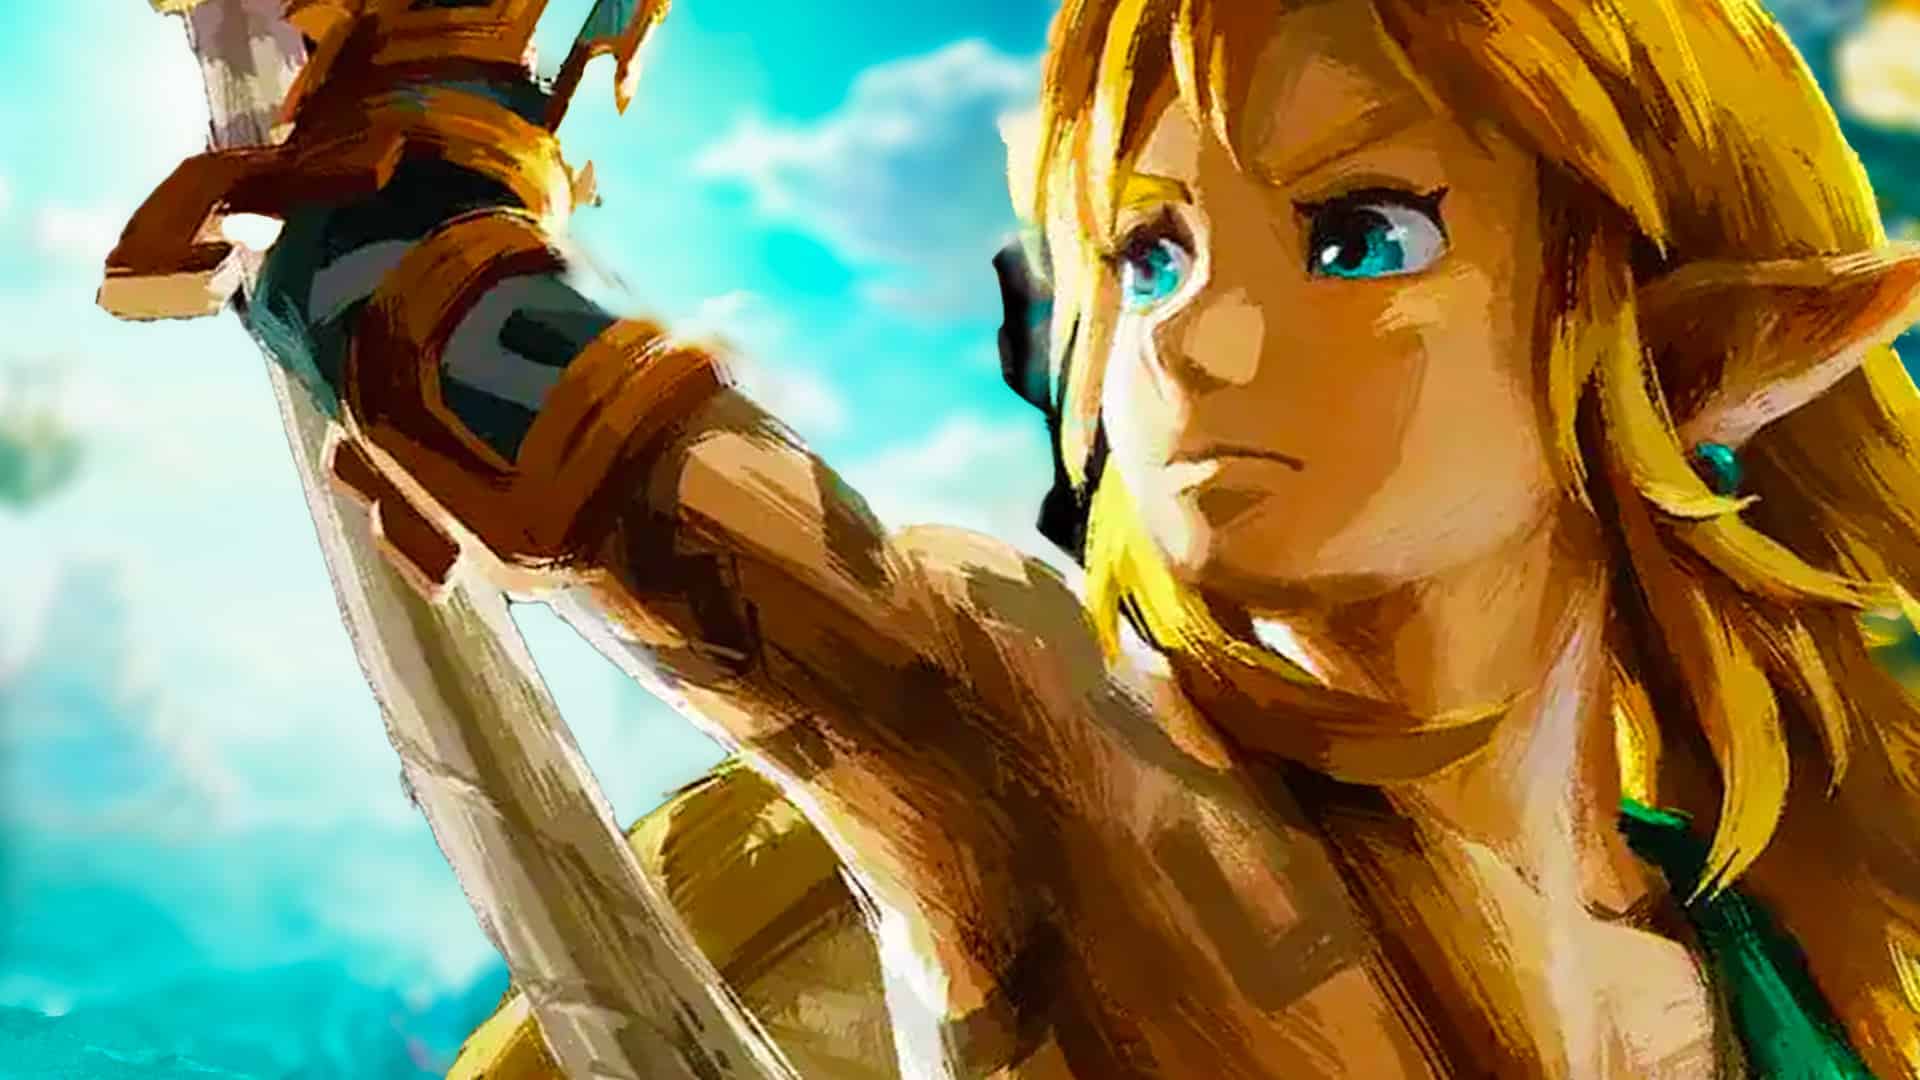 Live-Action Legend of Zelda Movie Has Entered Into Production